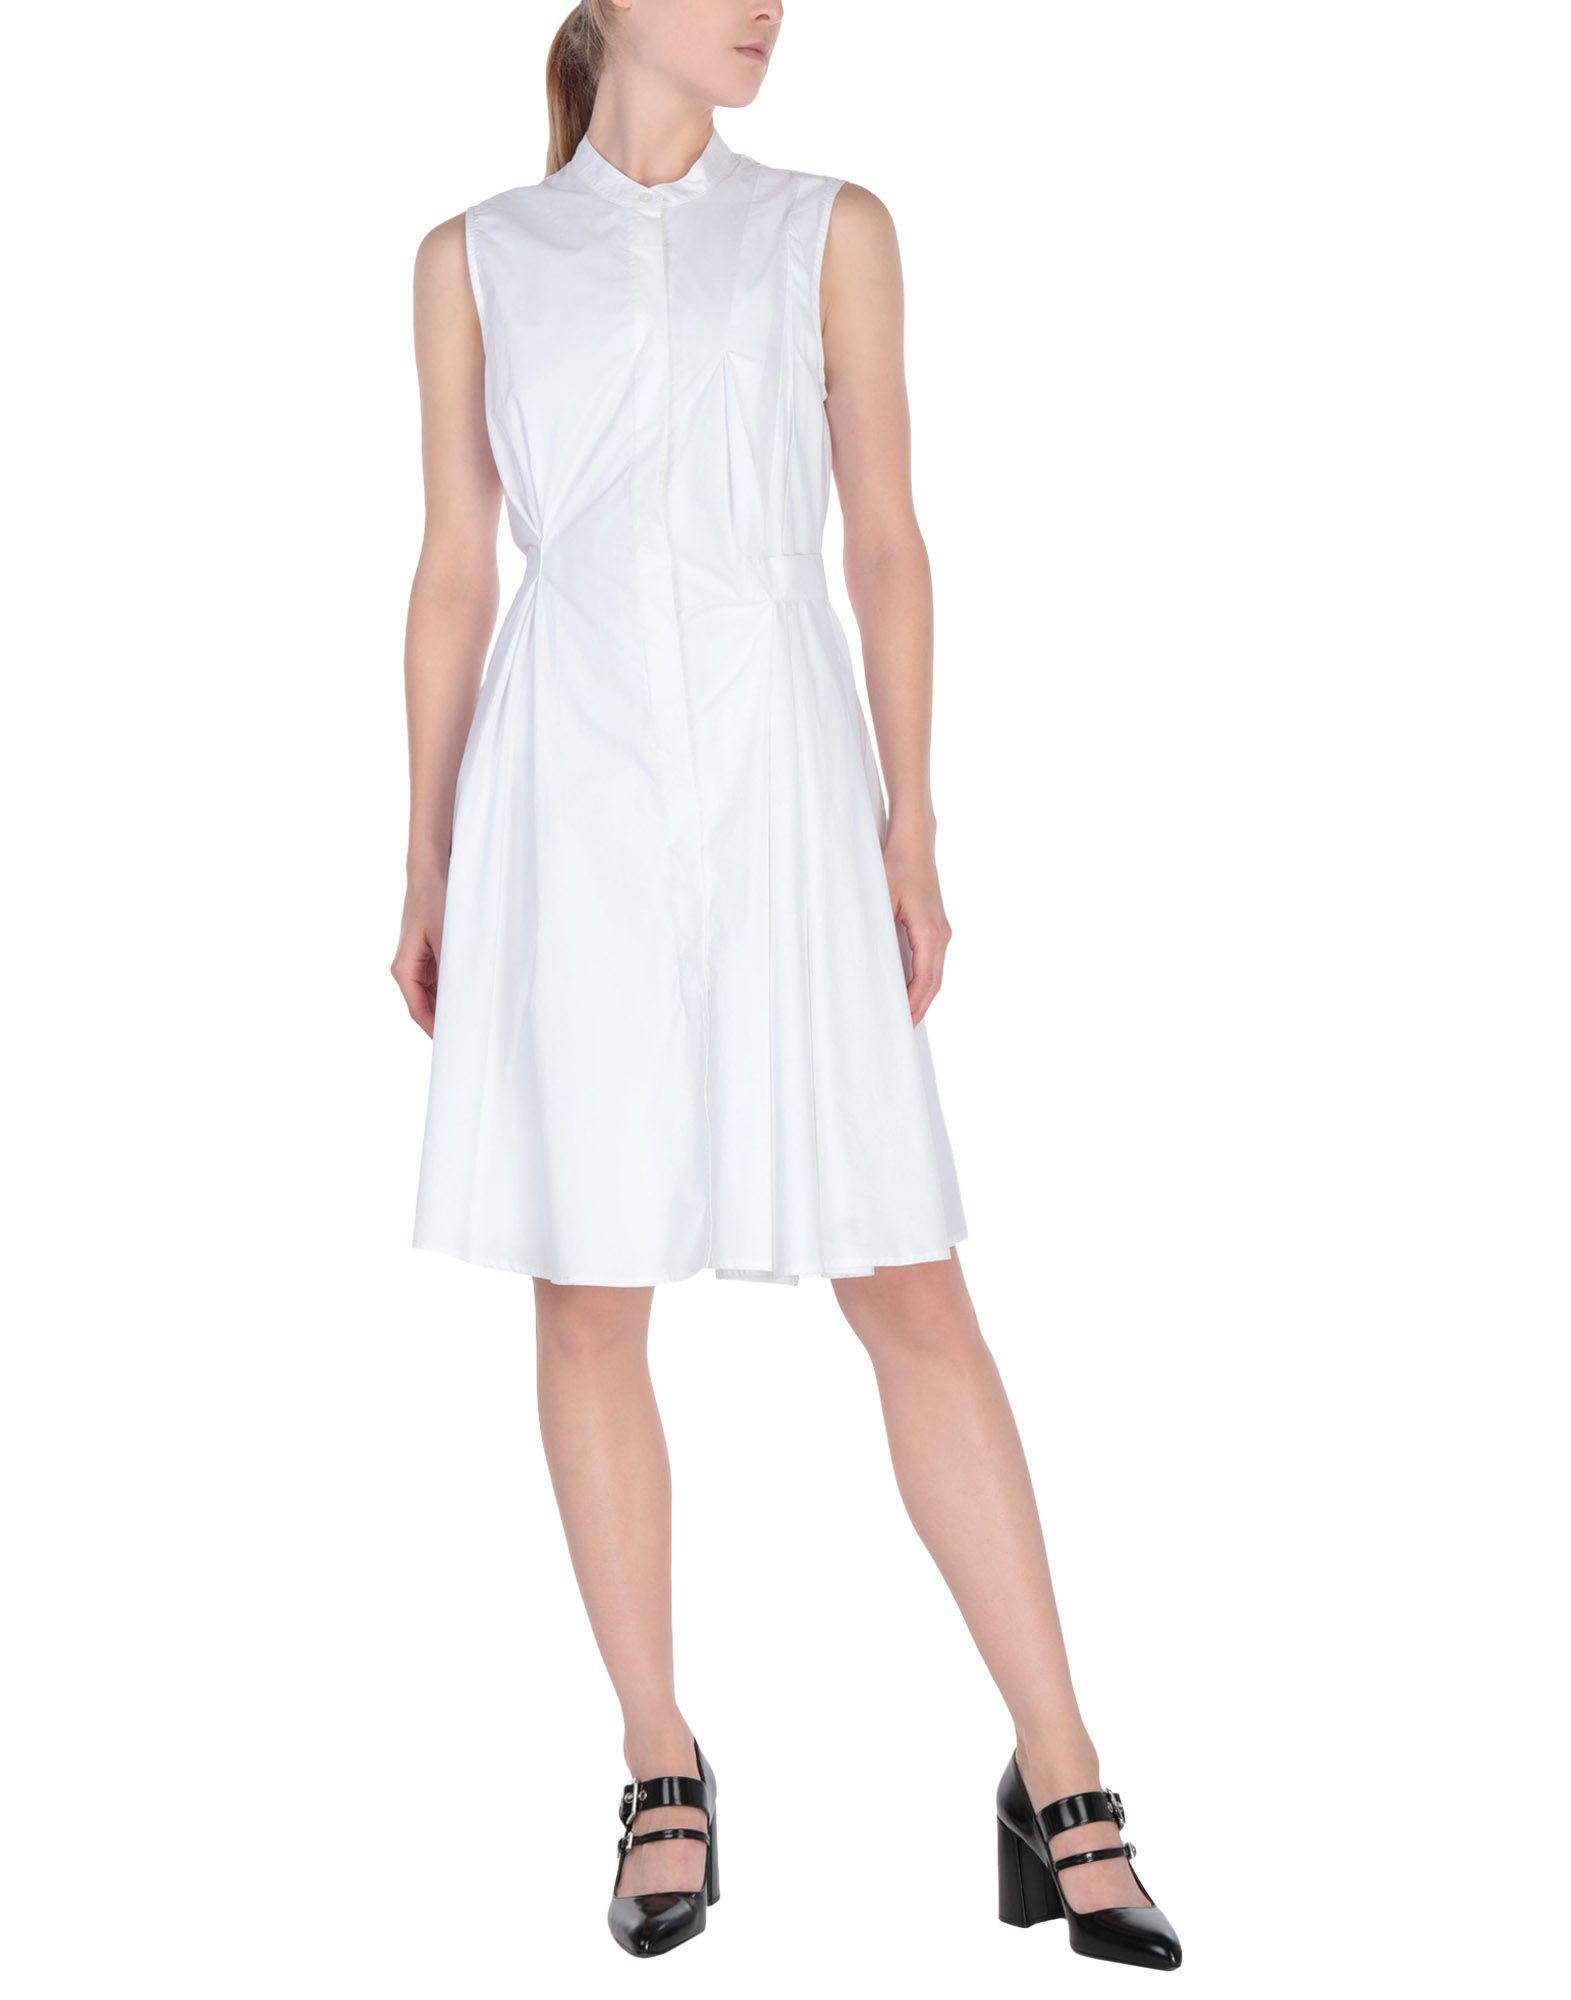 Proenza Schouler Knee-length Dress in White - Lyst